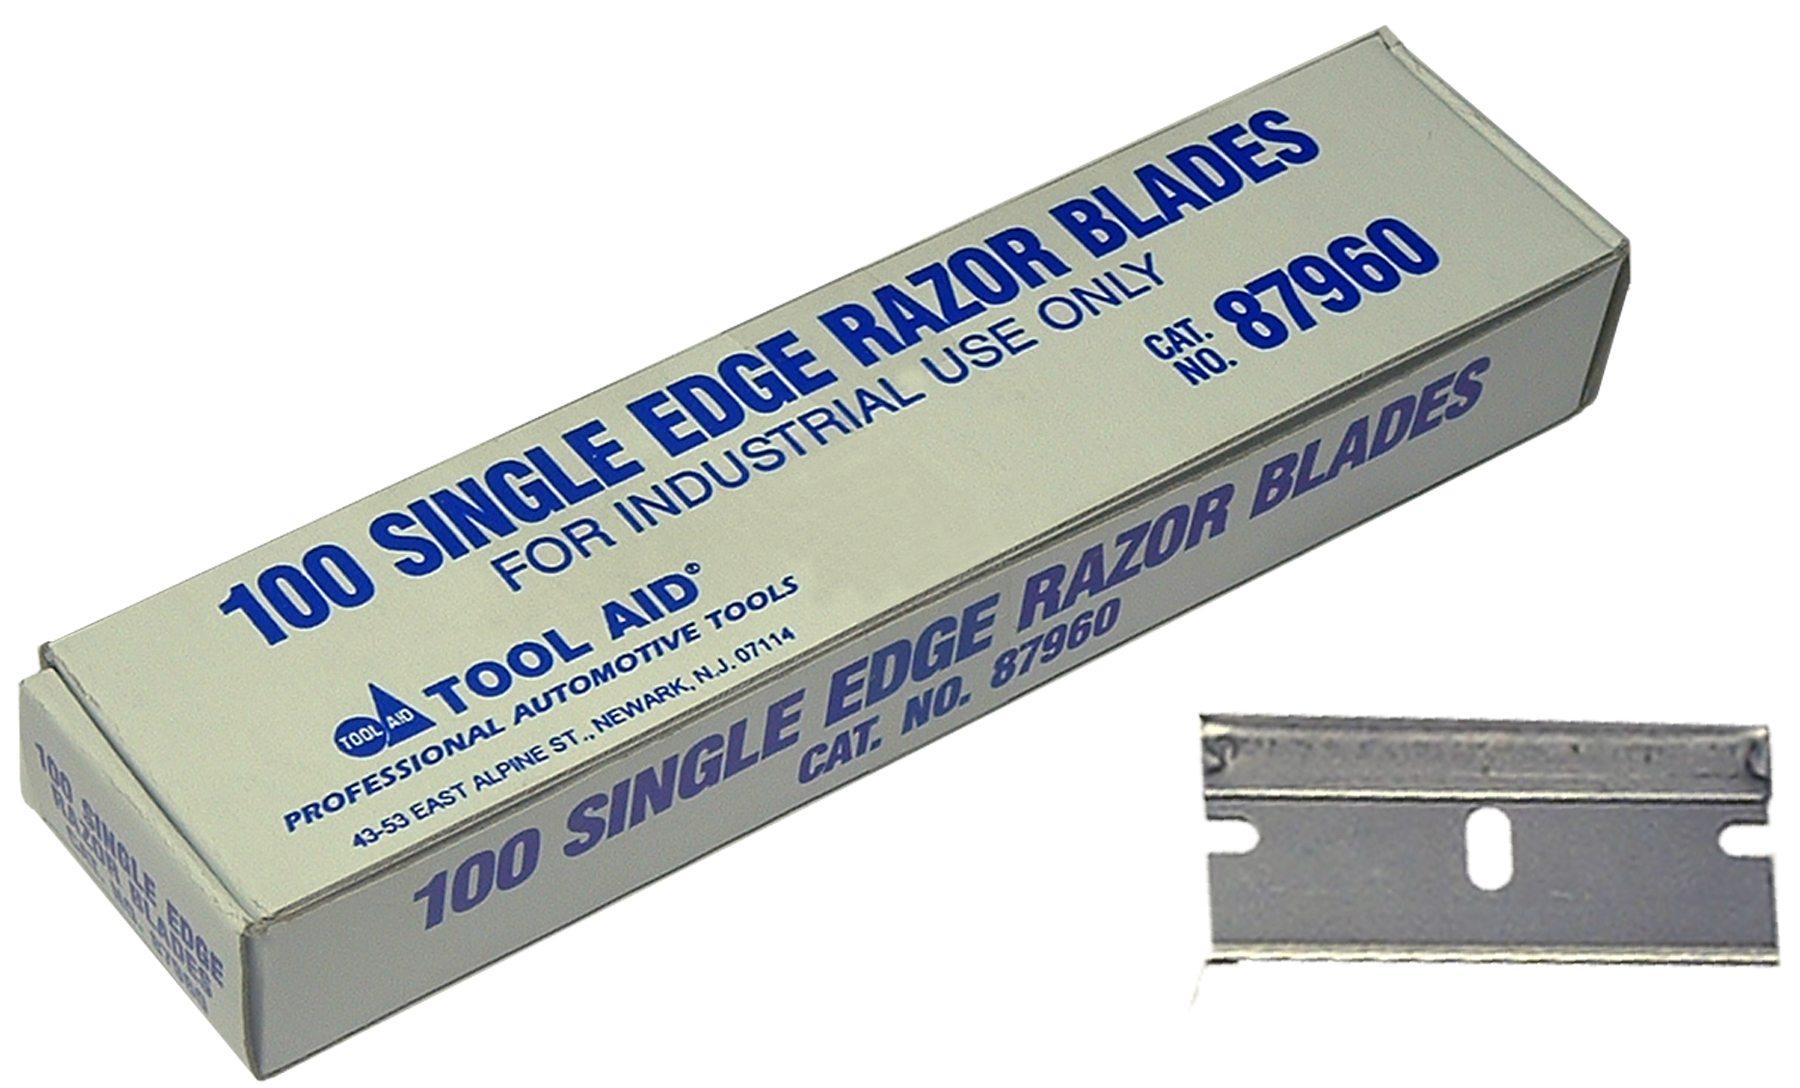 100 pc Industrial Quality Single Edge Utility Blades 